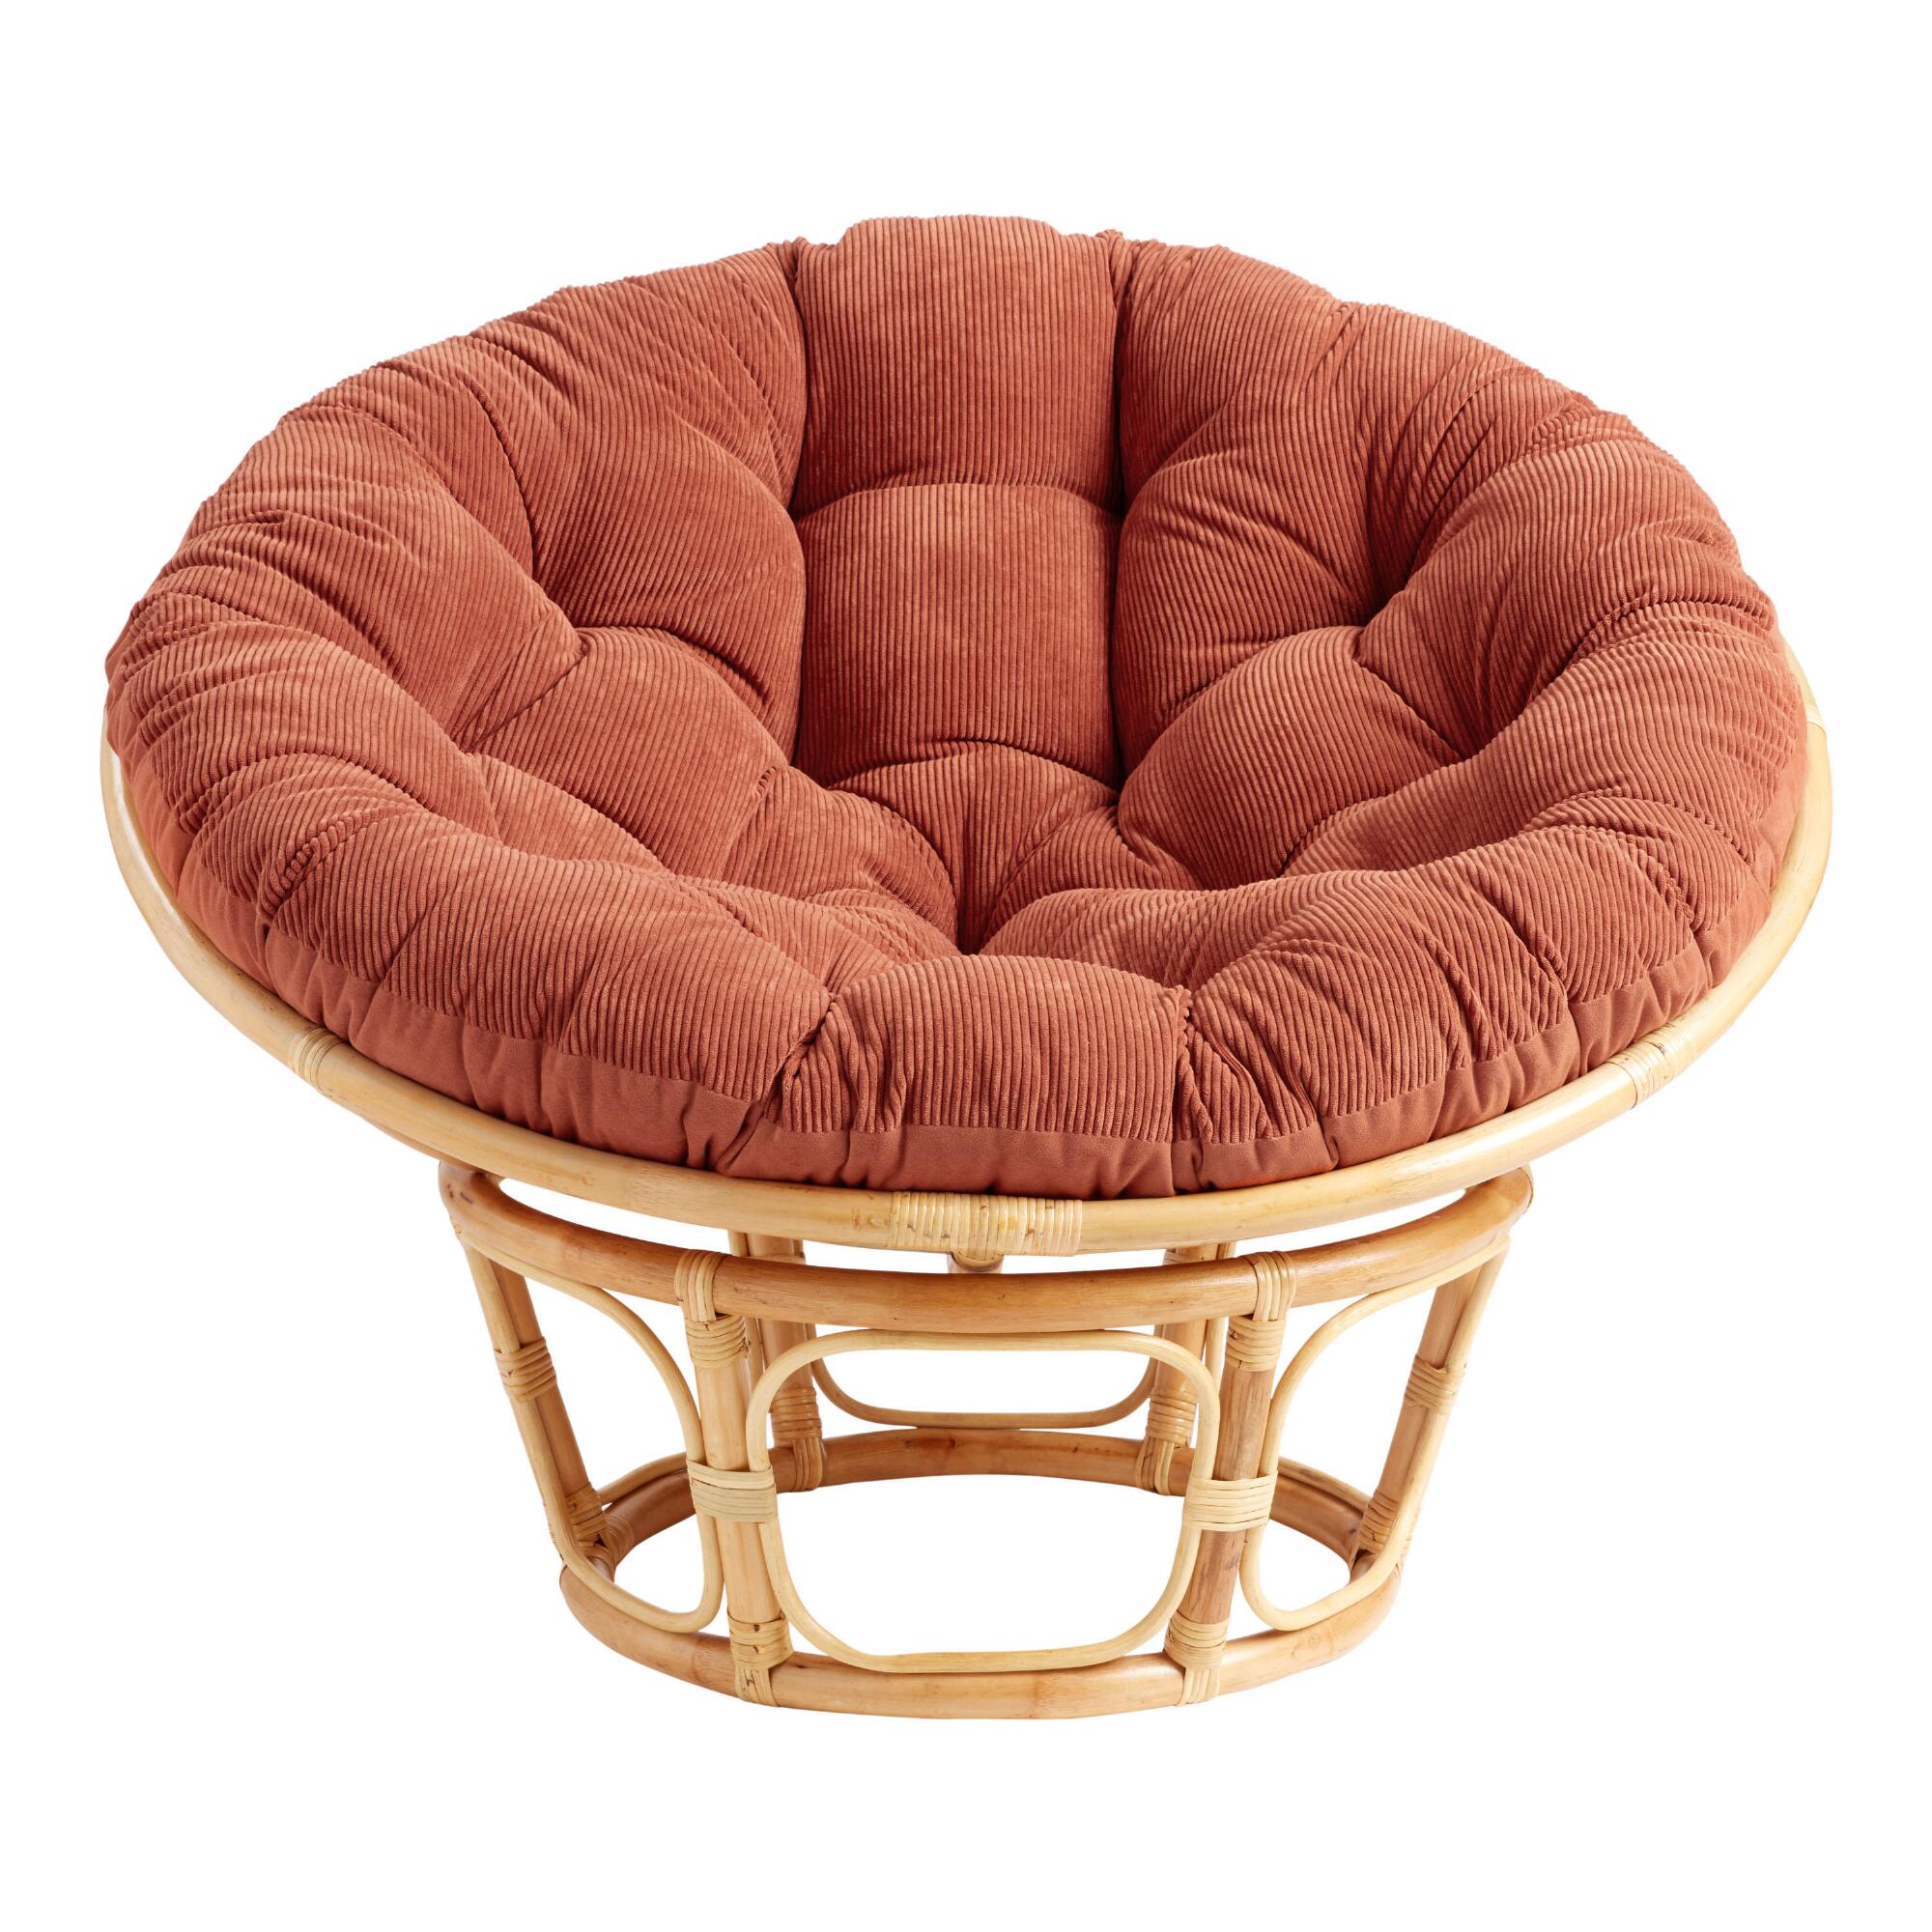 Terracotta Velvet Corduroy Papasan Cushion: Rust - Cotton - 58" Round by World Market